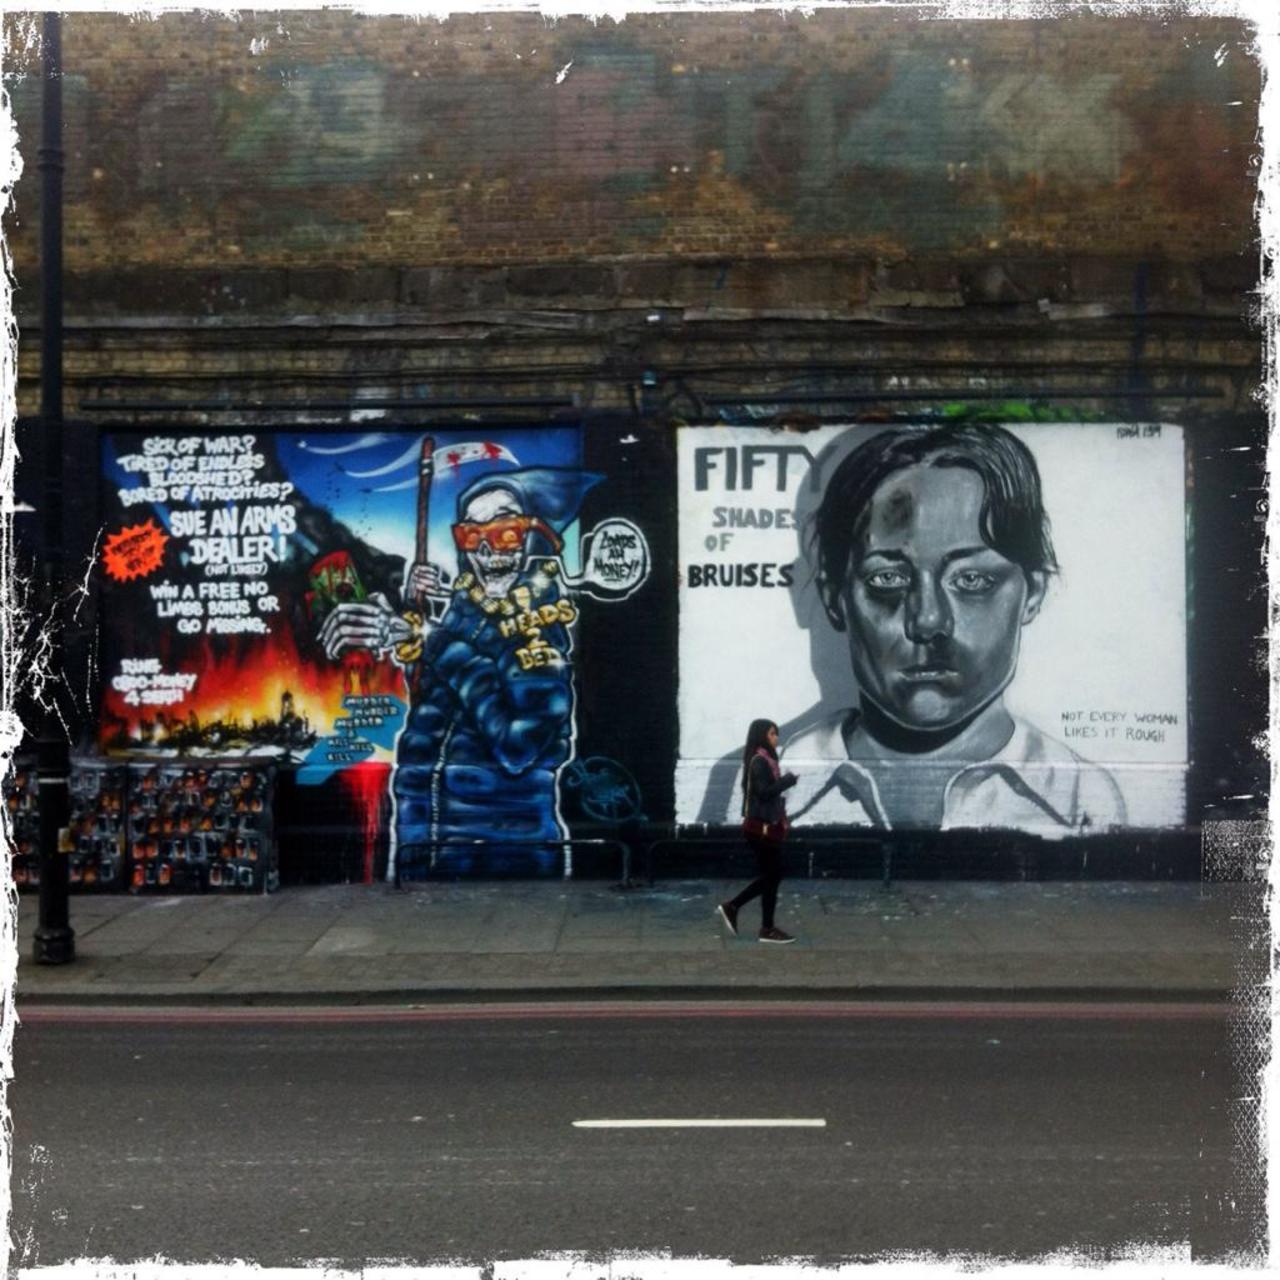 RT @BrickLaneArt: Work by @tizerone & @FuriaACK for the Shoreditch Curtain challenge #streetart #art #graffiti http://t.co/7b6Ask4yHK